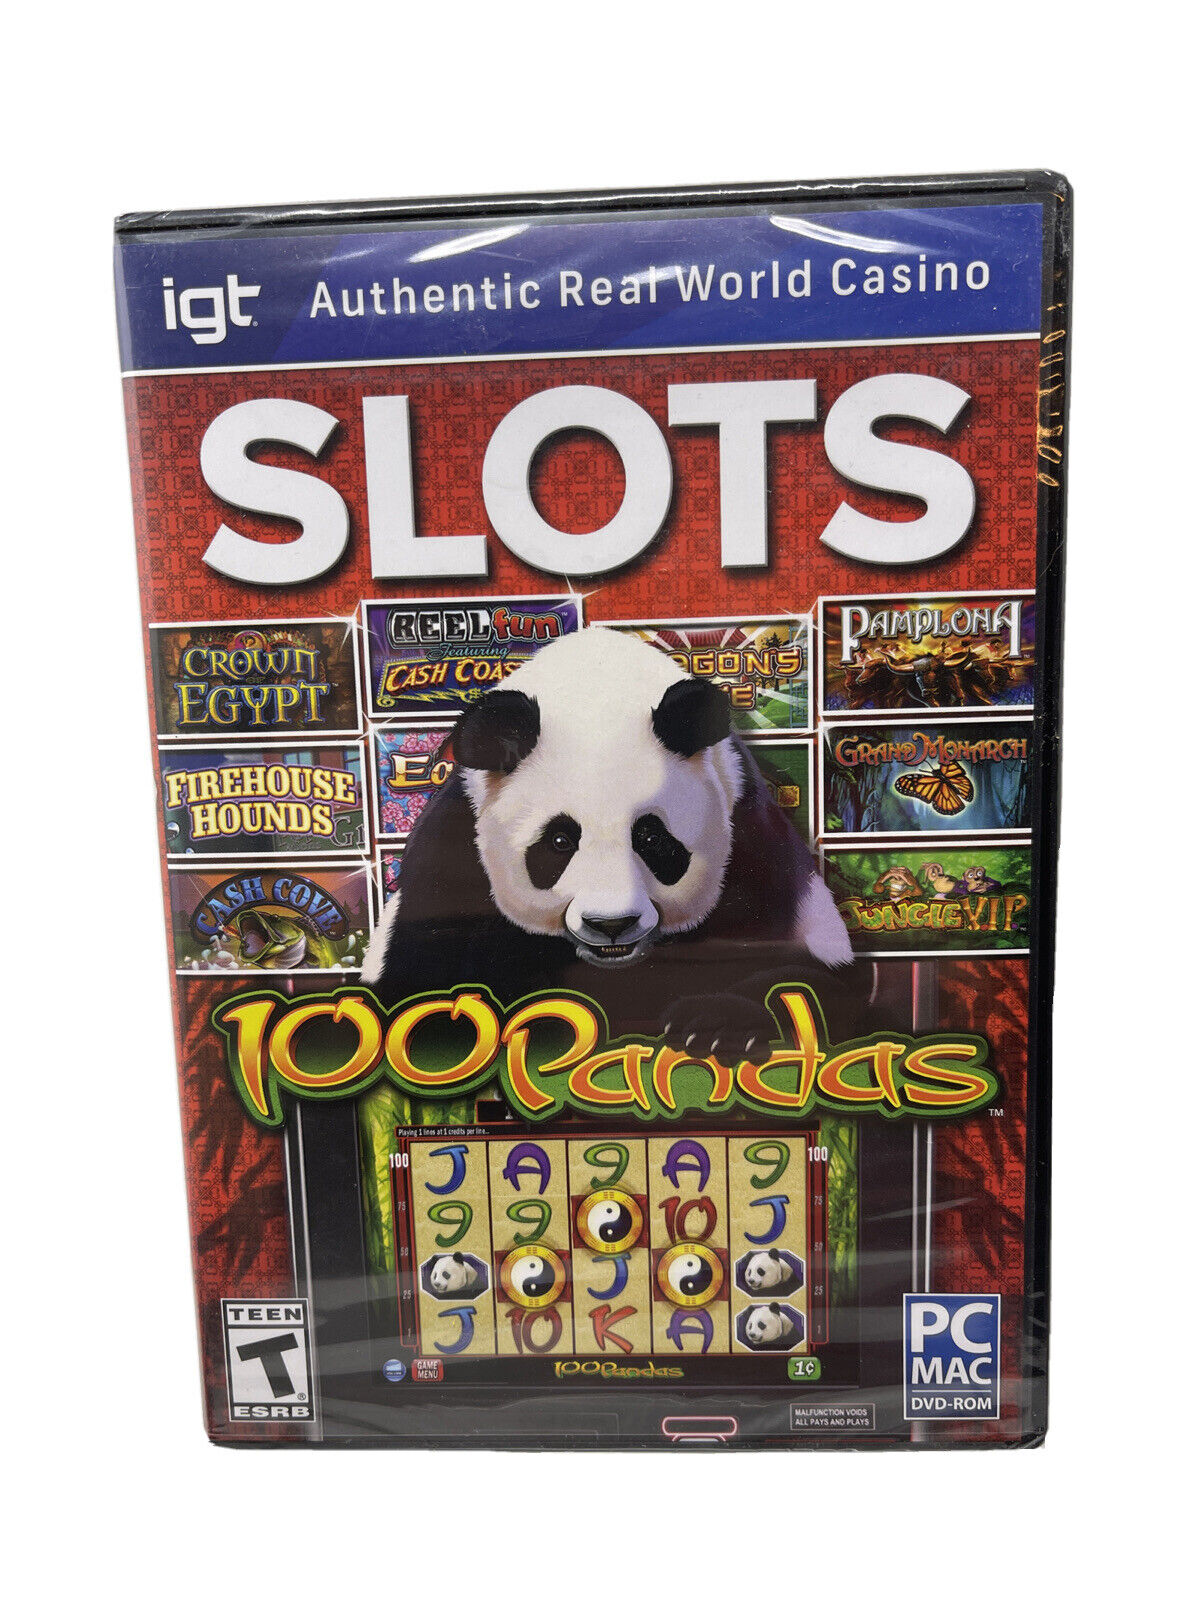 IGT Authentic Real World Casino Slots 100 Pandas (Pc Mac,Dvd-Rom, 2015)